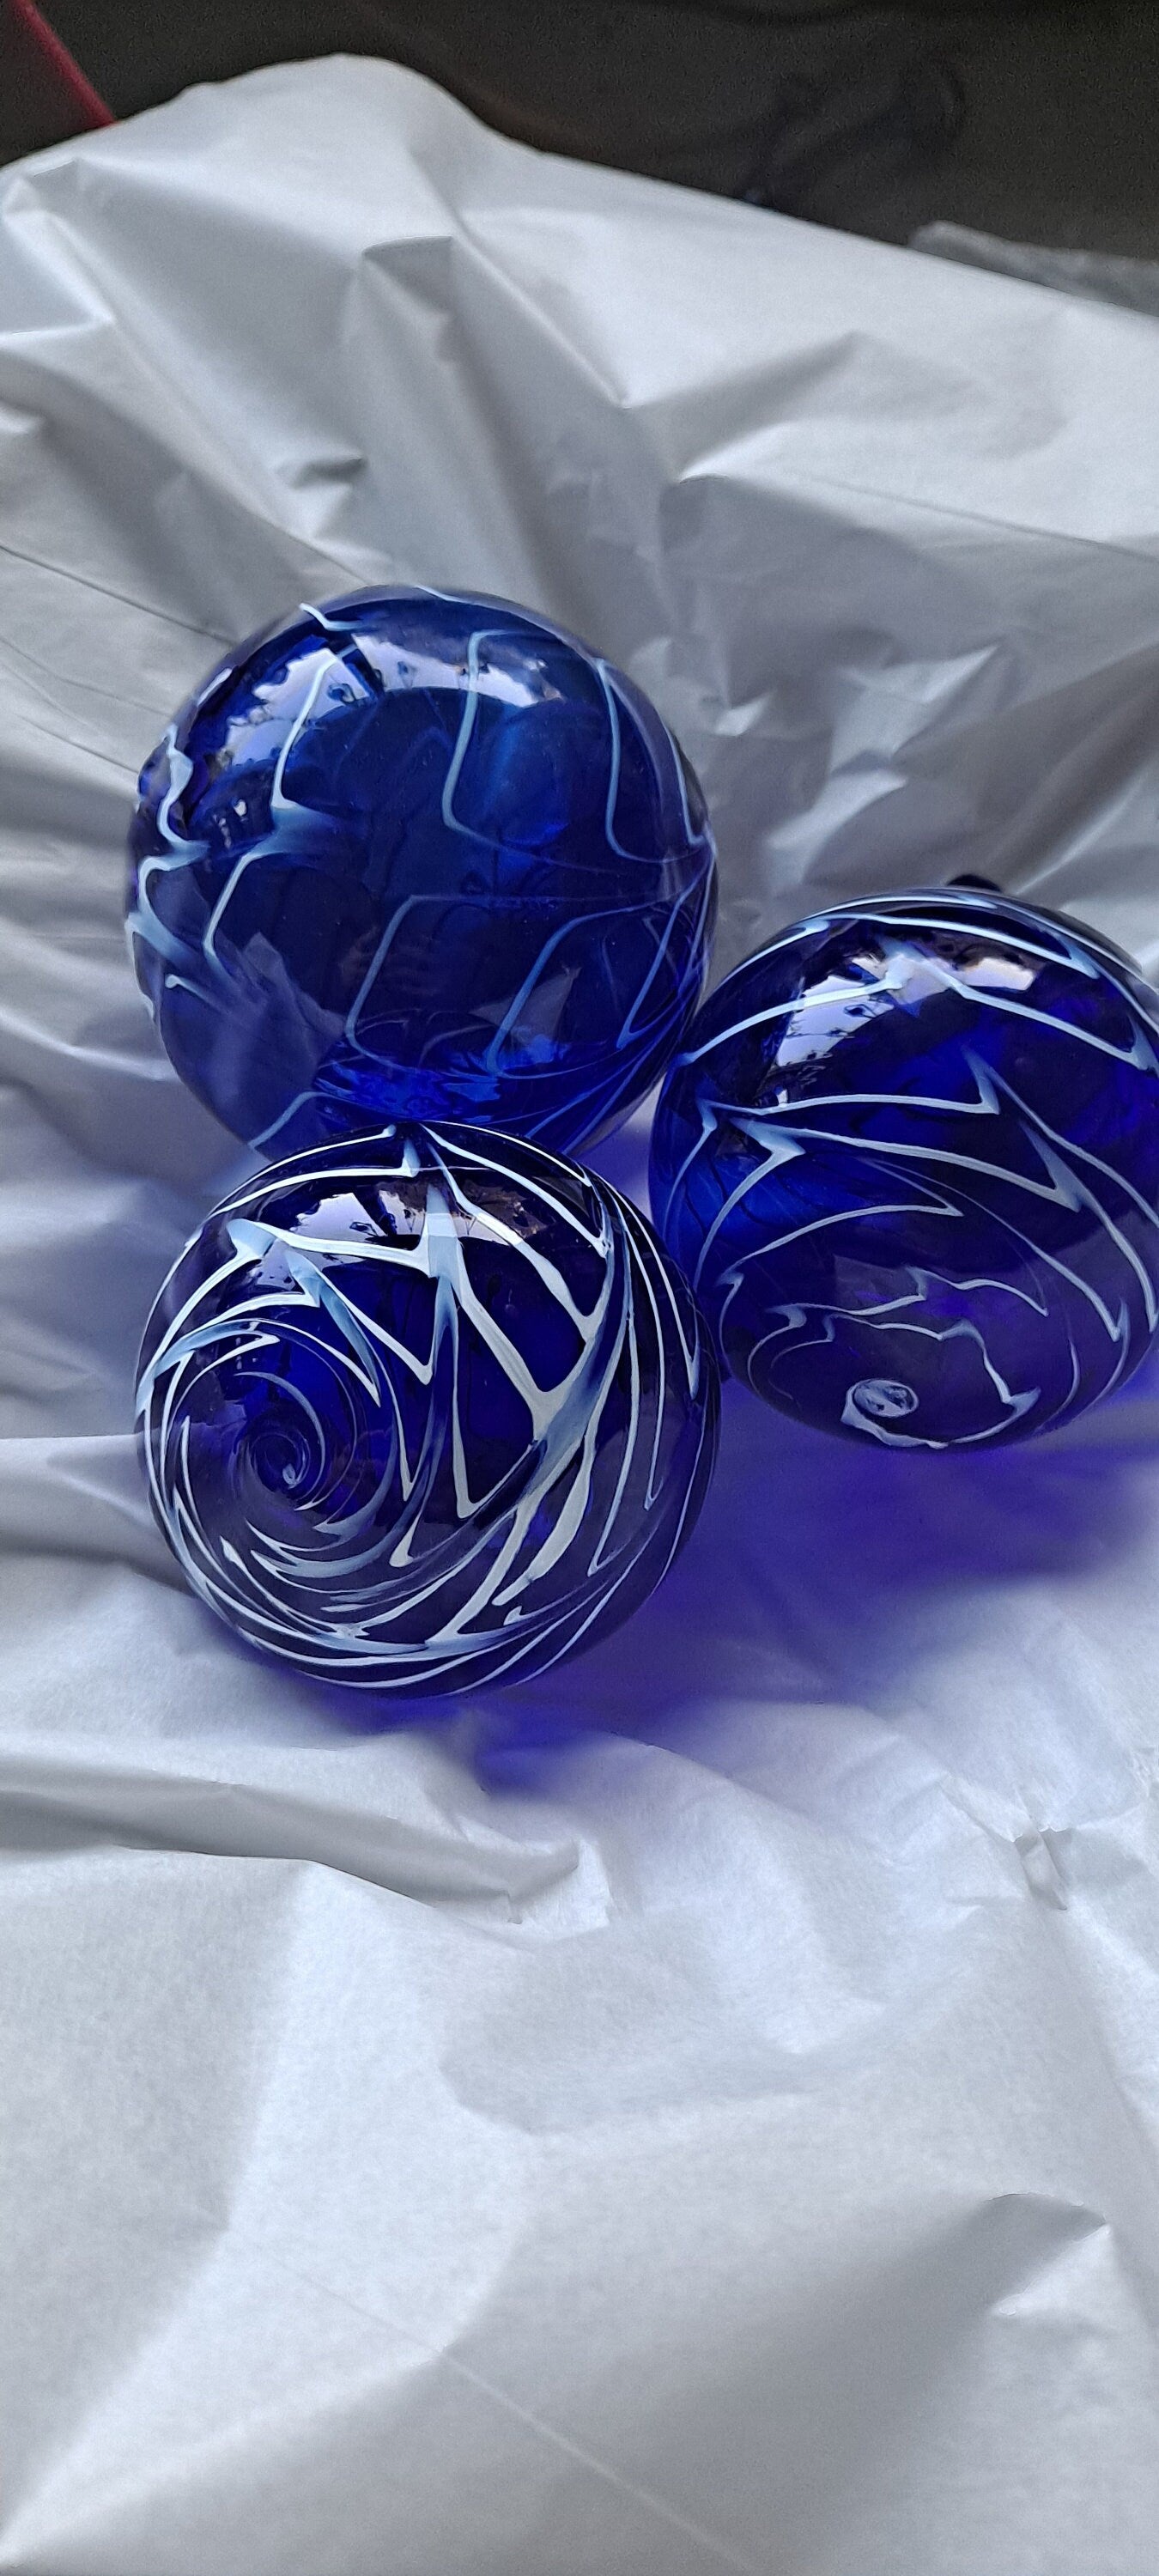 Hand Blown Glass Cobalt Blue Ornament Collection